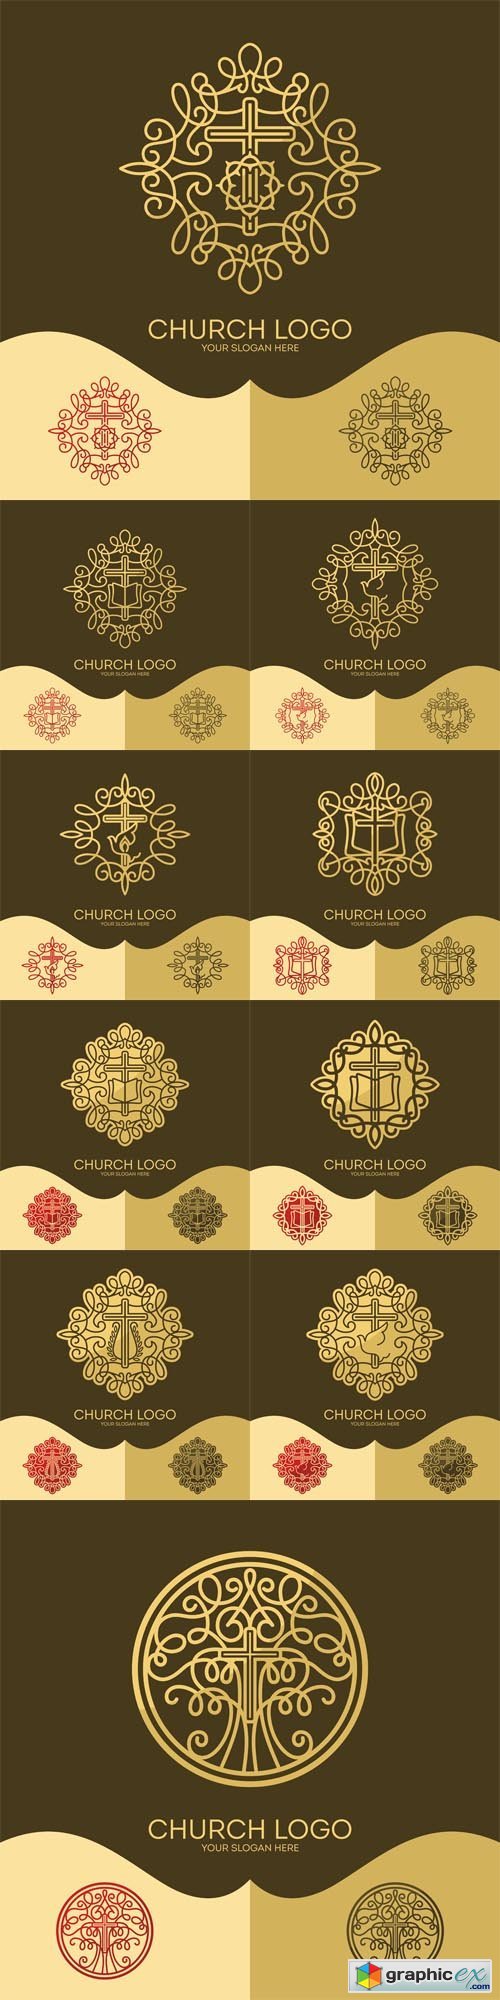 Church logo. Christian symbols. The cross of Jesus and elegant patterns